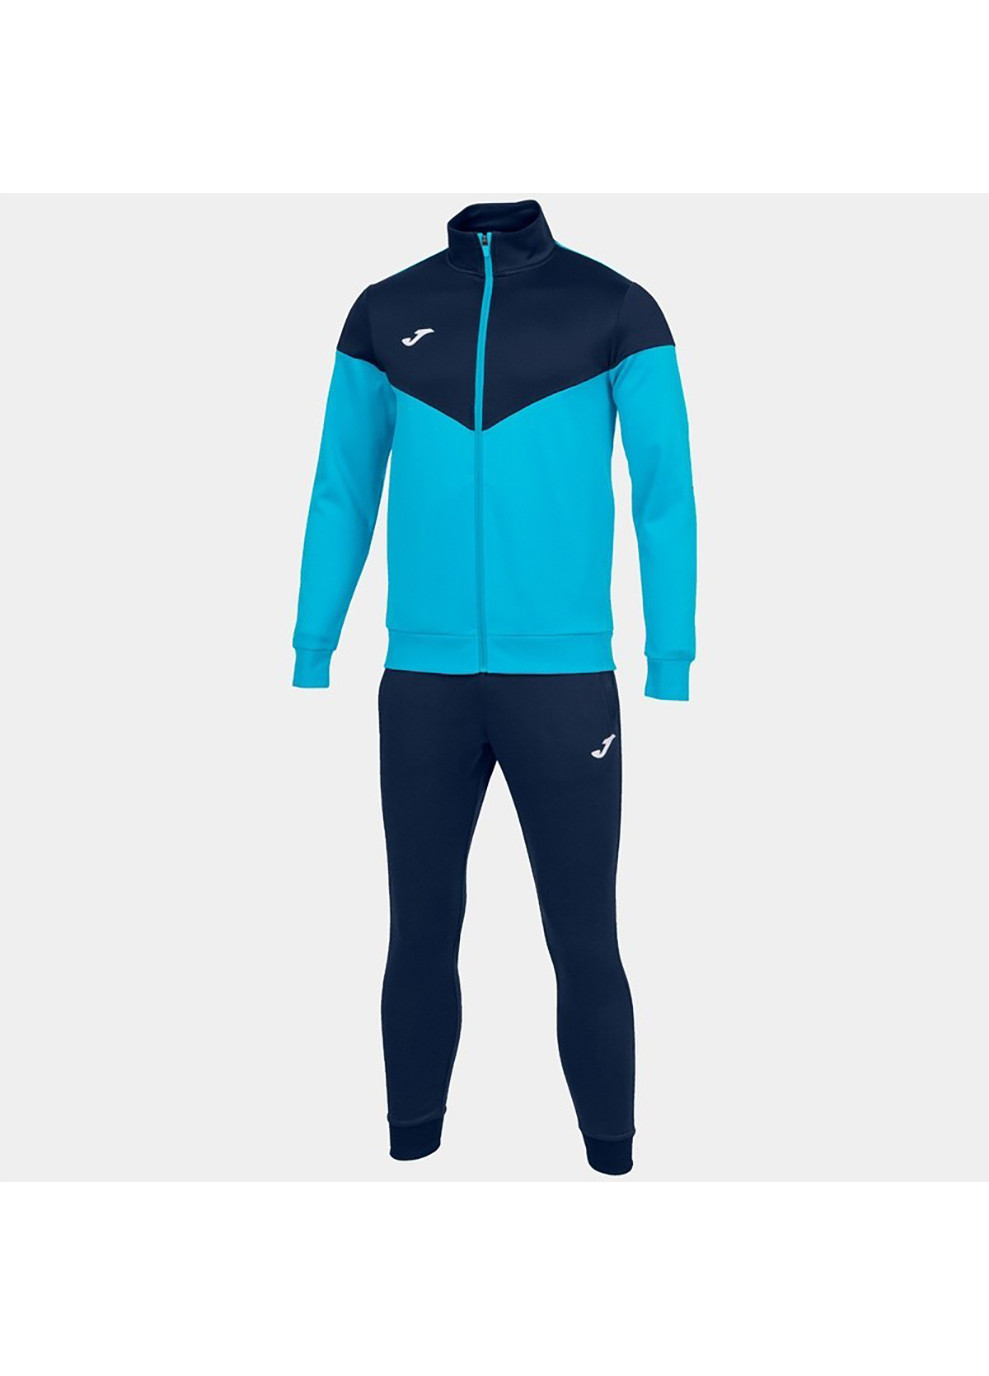 Мужской спортивный костюм OXFORD TRACKSUIT синий, голубой Joma (260633984)